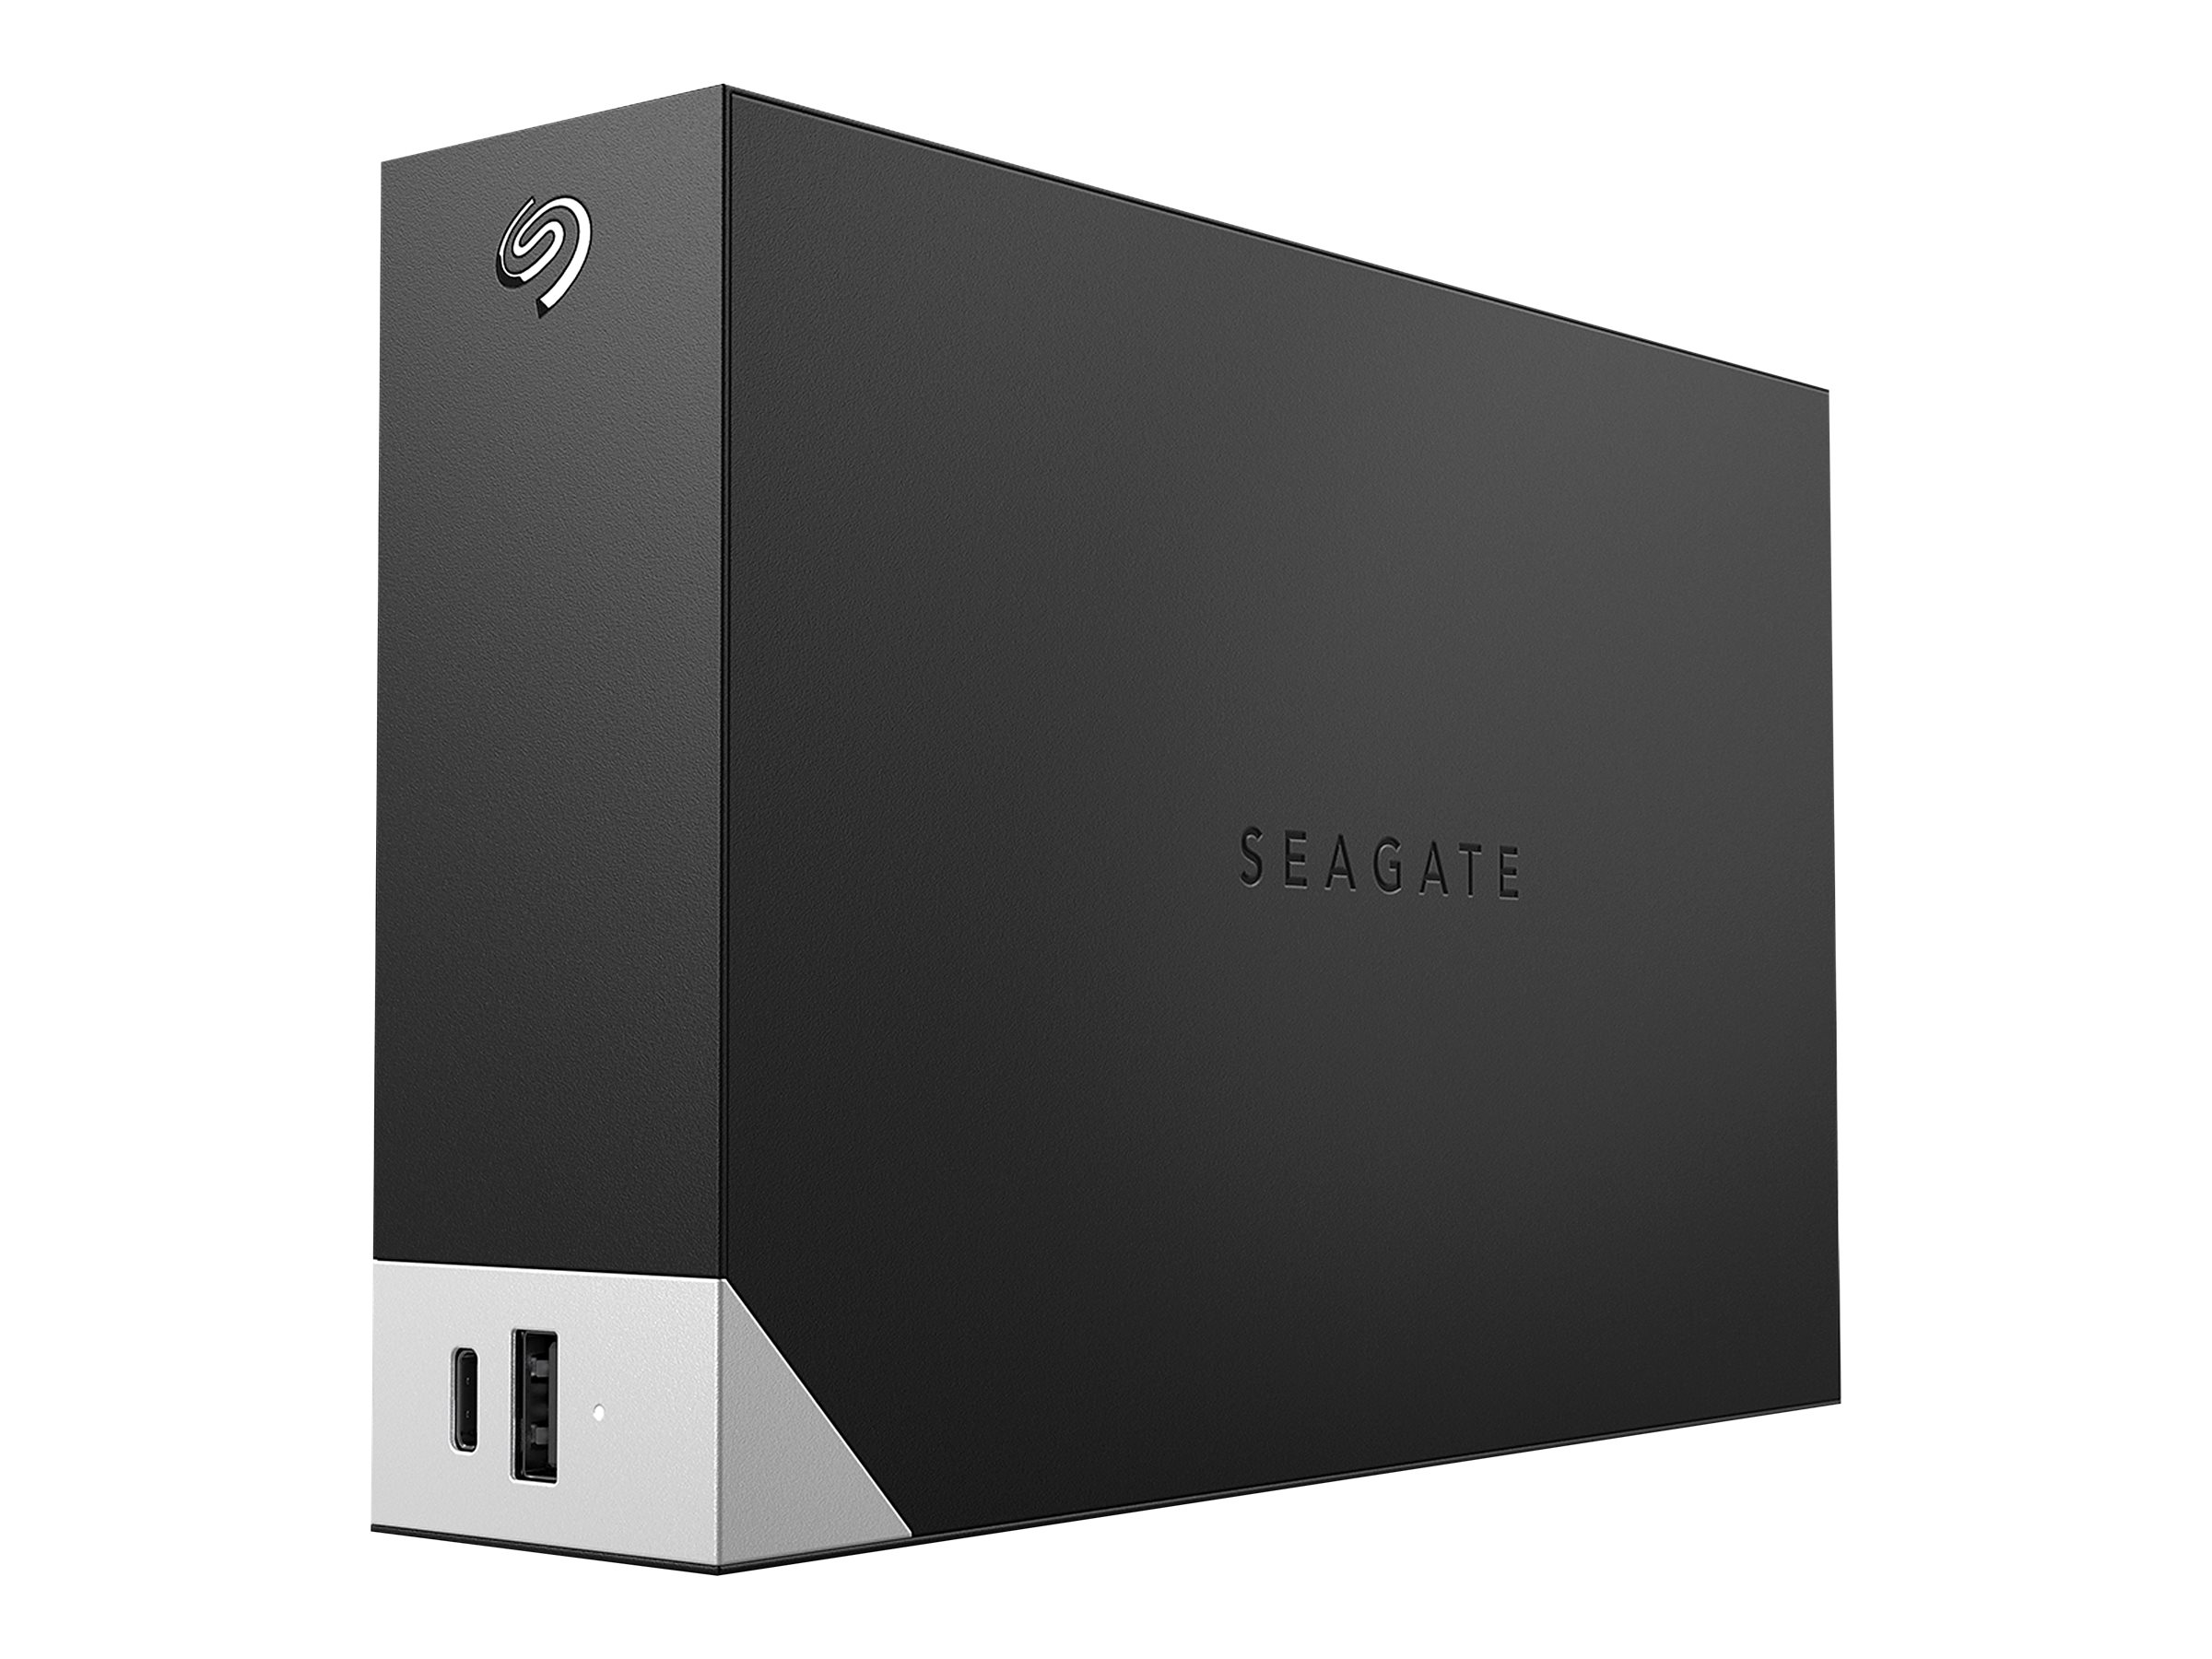 Seagate One Touch with hub STLC16000400 - Festplatte - 16 TB - extern (Stationär) - USB 3.0 - Schwarz